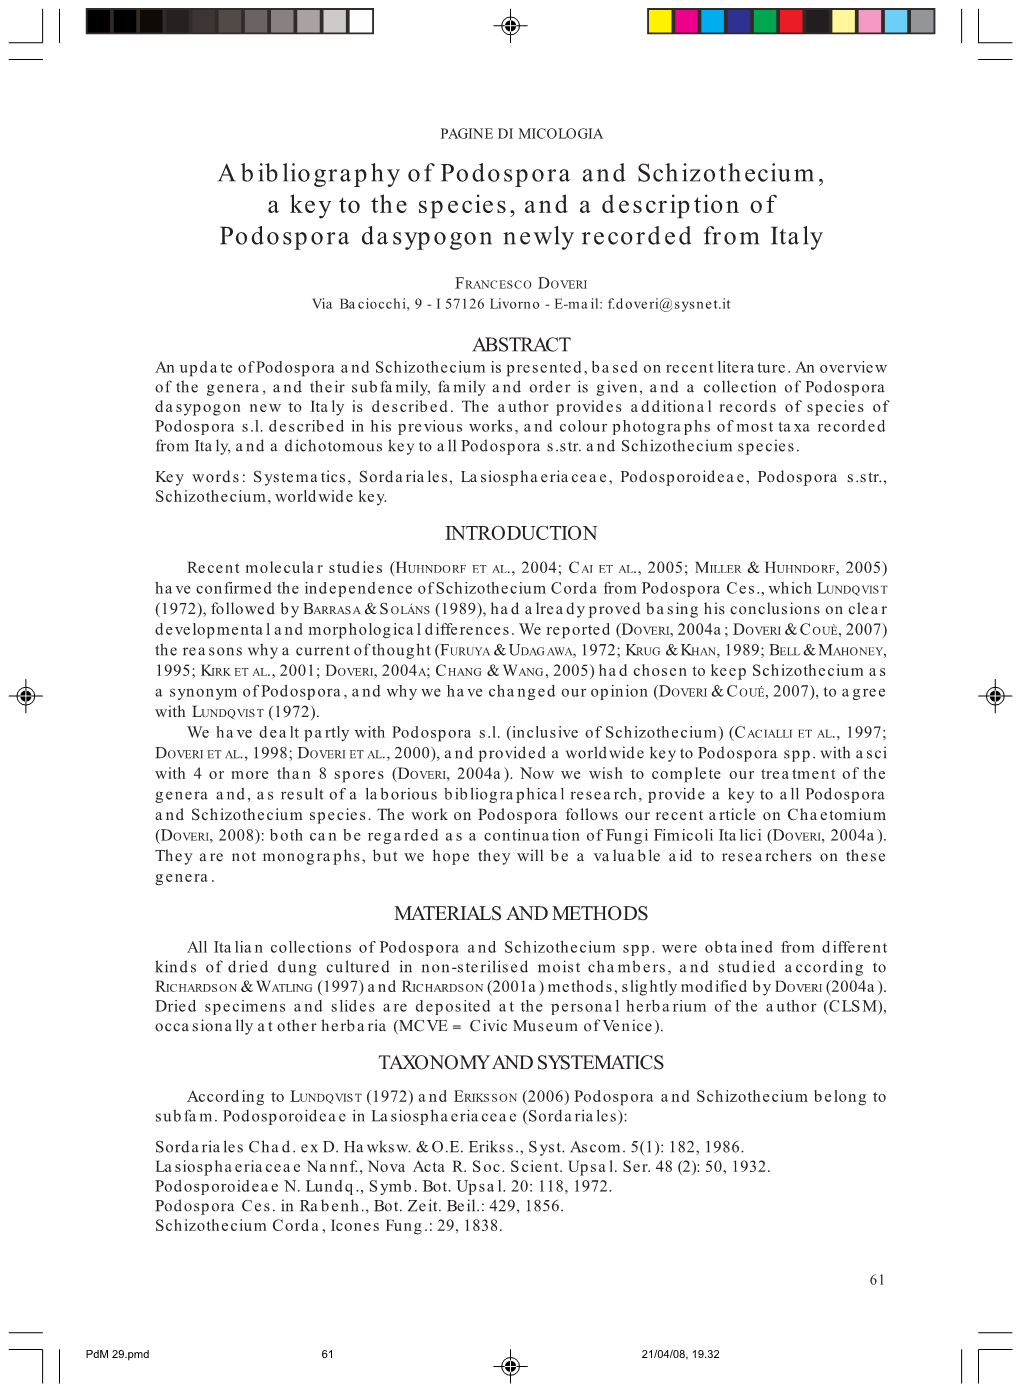 A Bibliography of Podospora and Schizothecium, a Key to the Species, and a Description of Podospora Dasypogon Newly Recorded from Italy